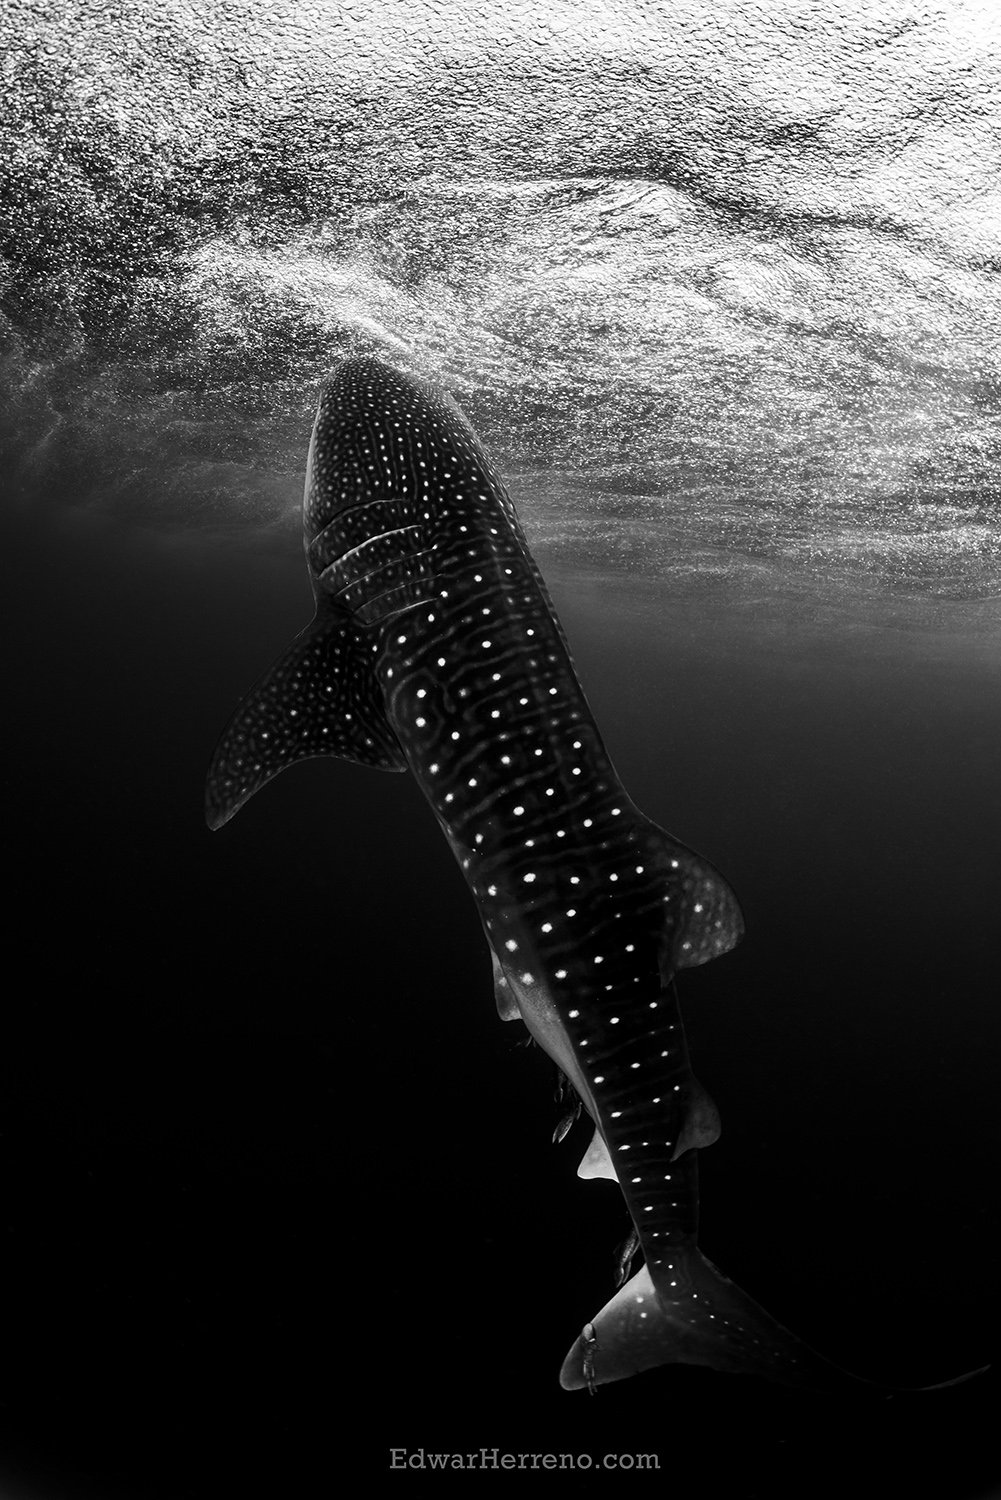 Whale shark under rain. Cocos Island - Costa Rica.